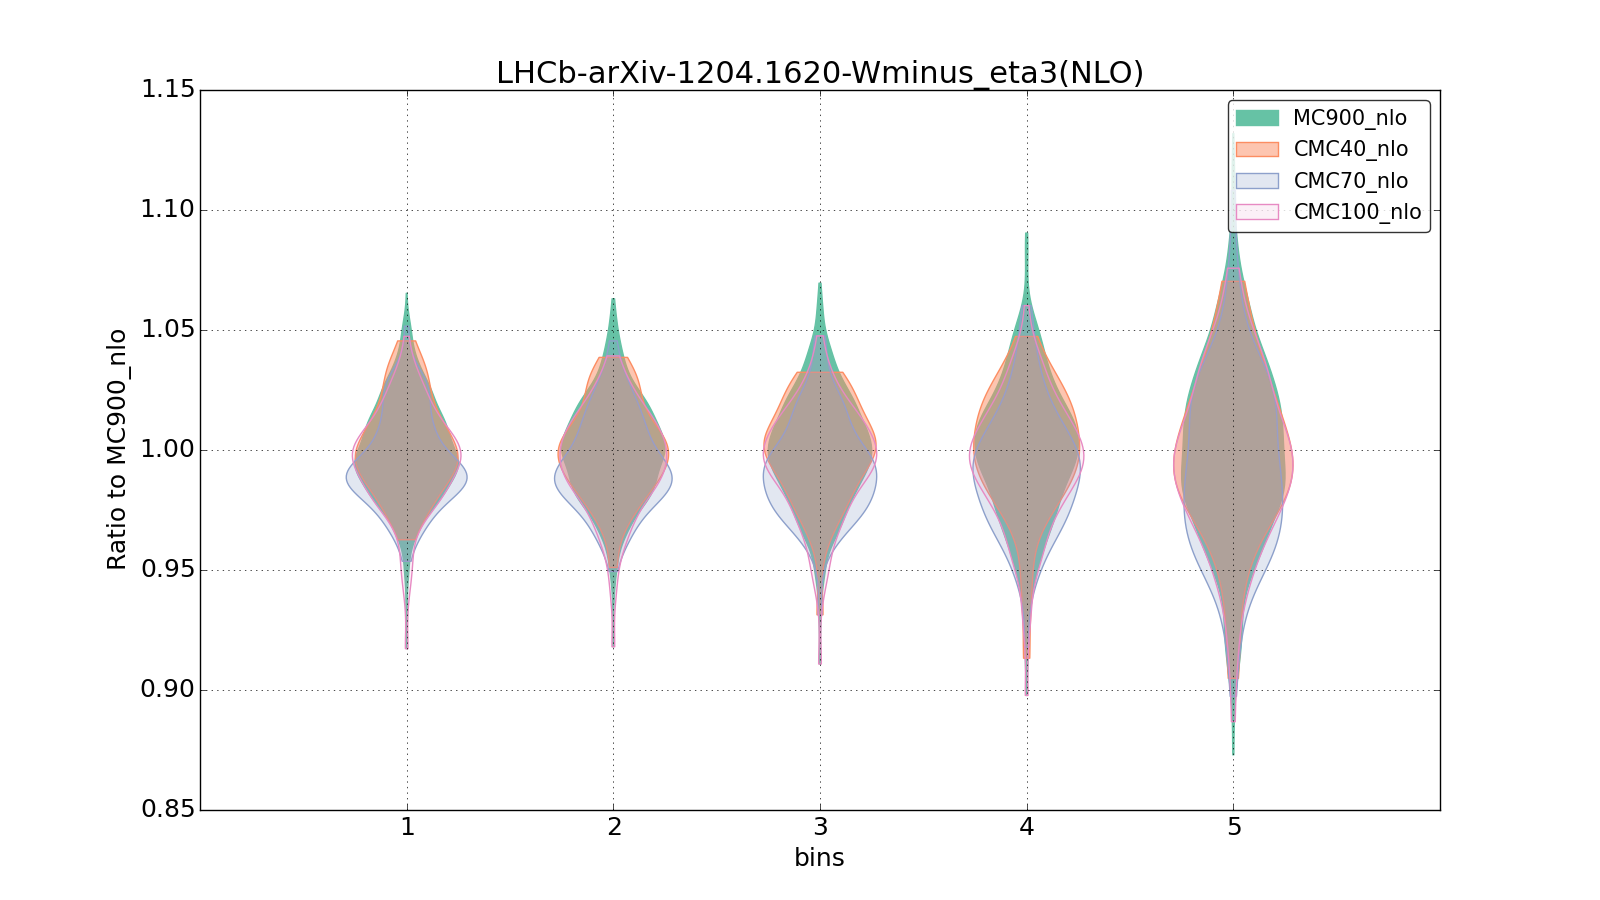 figure plots/CMCpheno/group_1_violinplot_LHCb-arXiv-12041620-Wminus_eta3(NLO).png